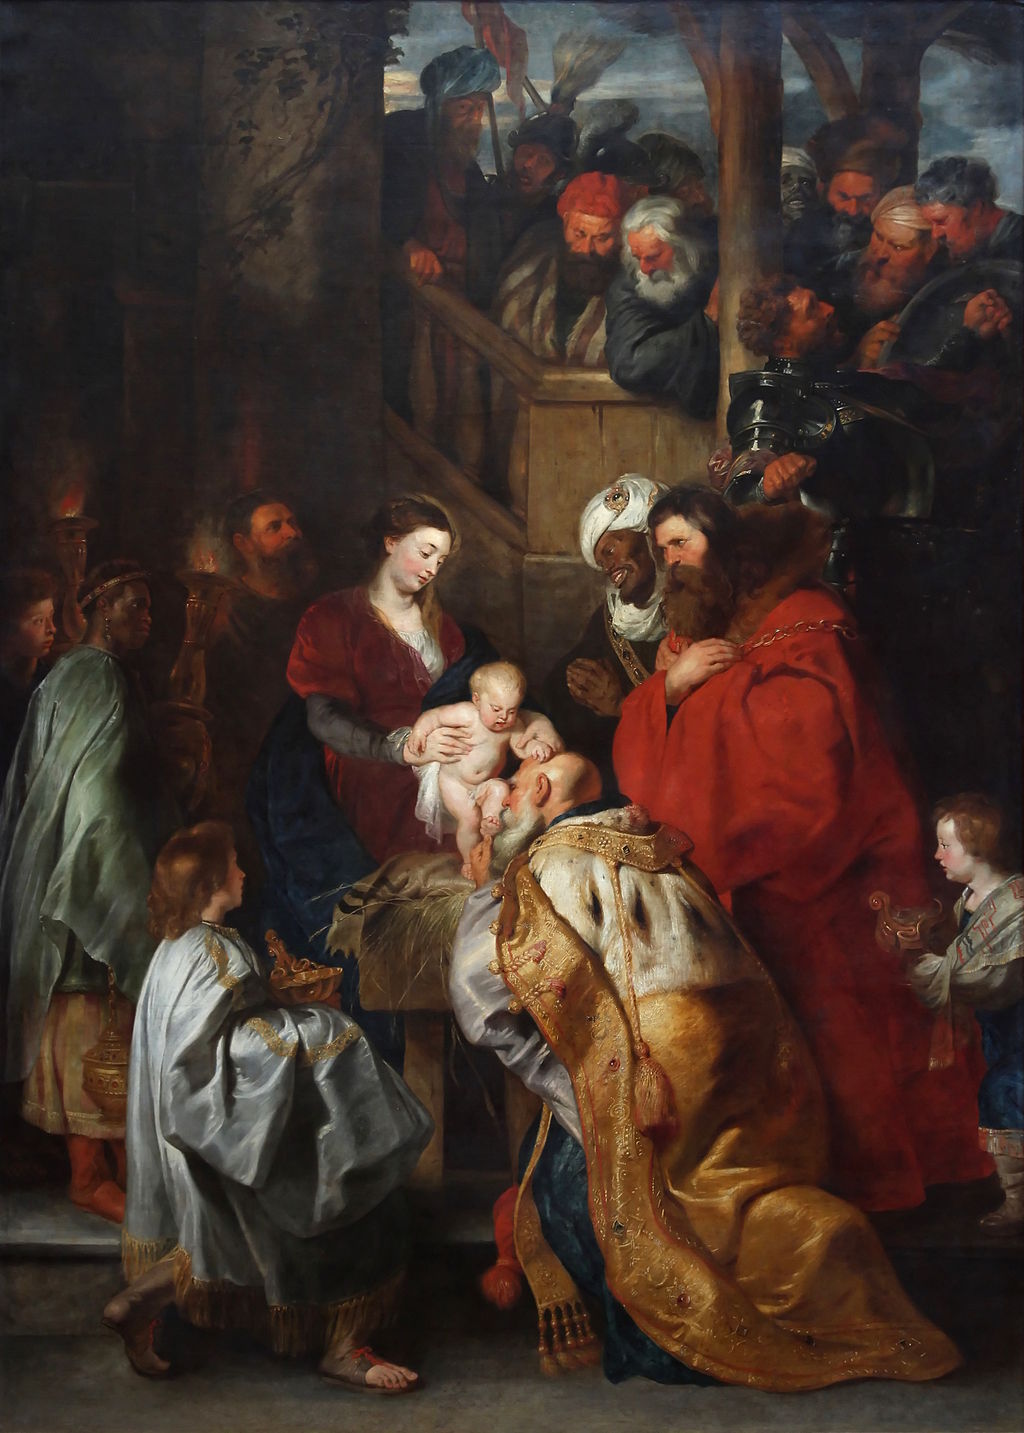 Peter Paul Rubens, The Adoration of the Magi, 1619